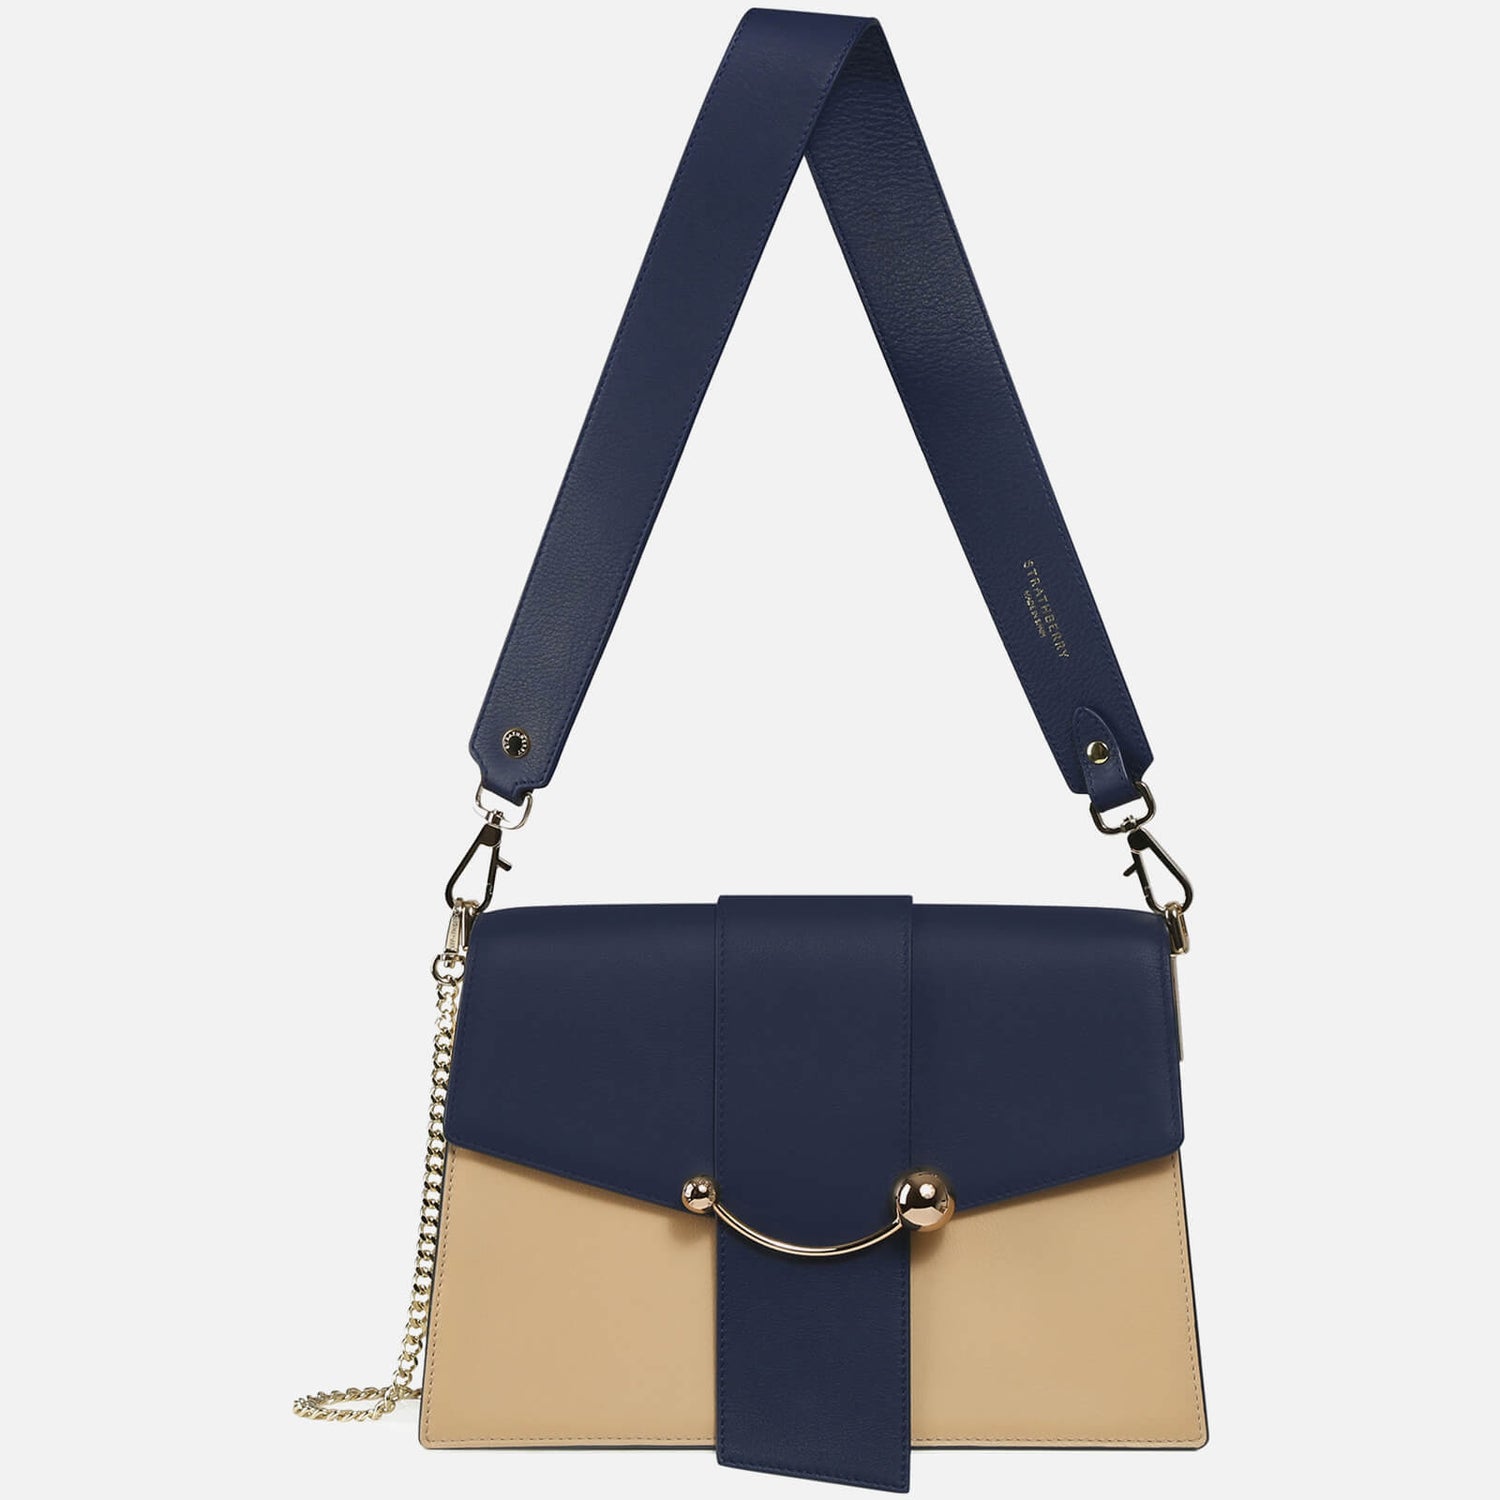 Strathberry Women's Crescent Shoulder- W Leather Shoulder Bag - Tri Colour - Navy/Latte/Vanilla